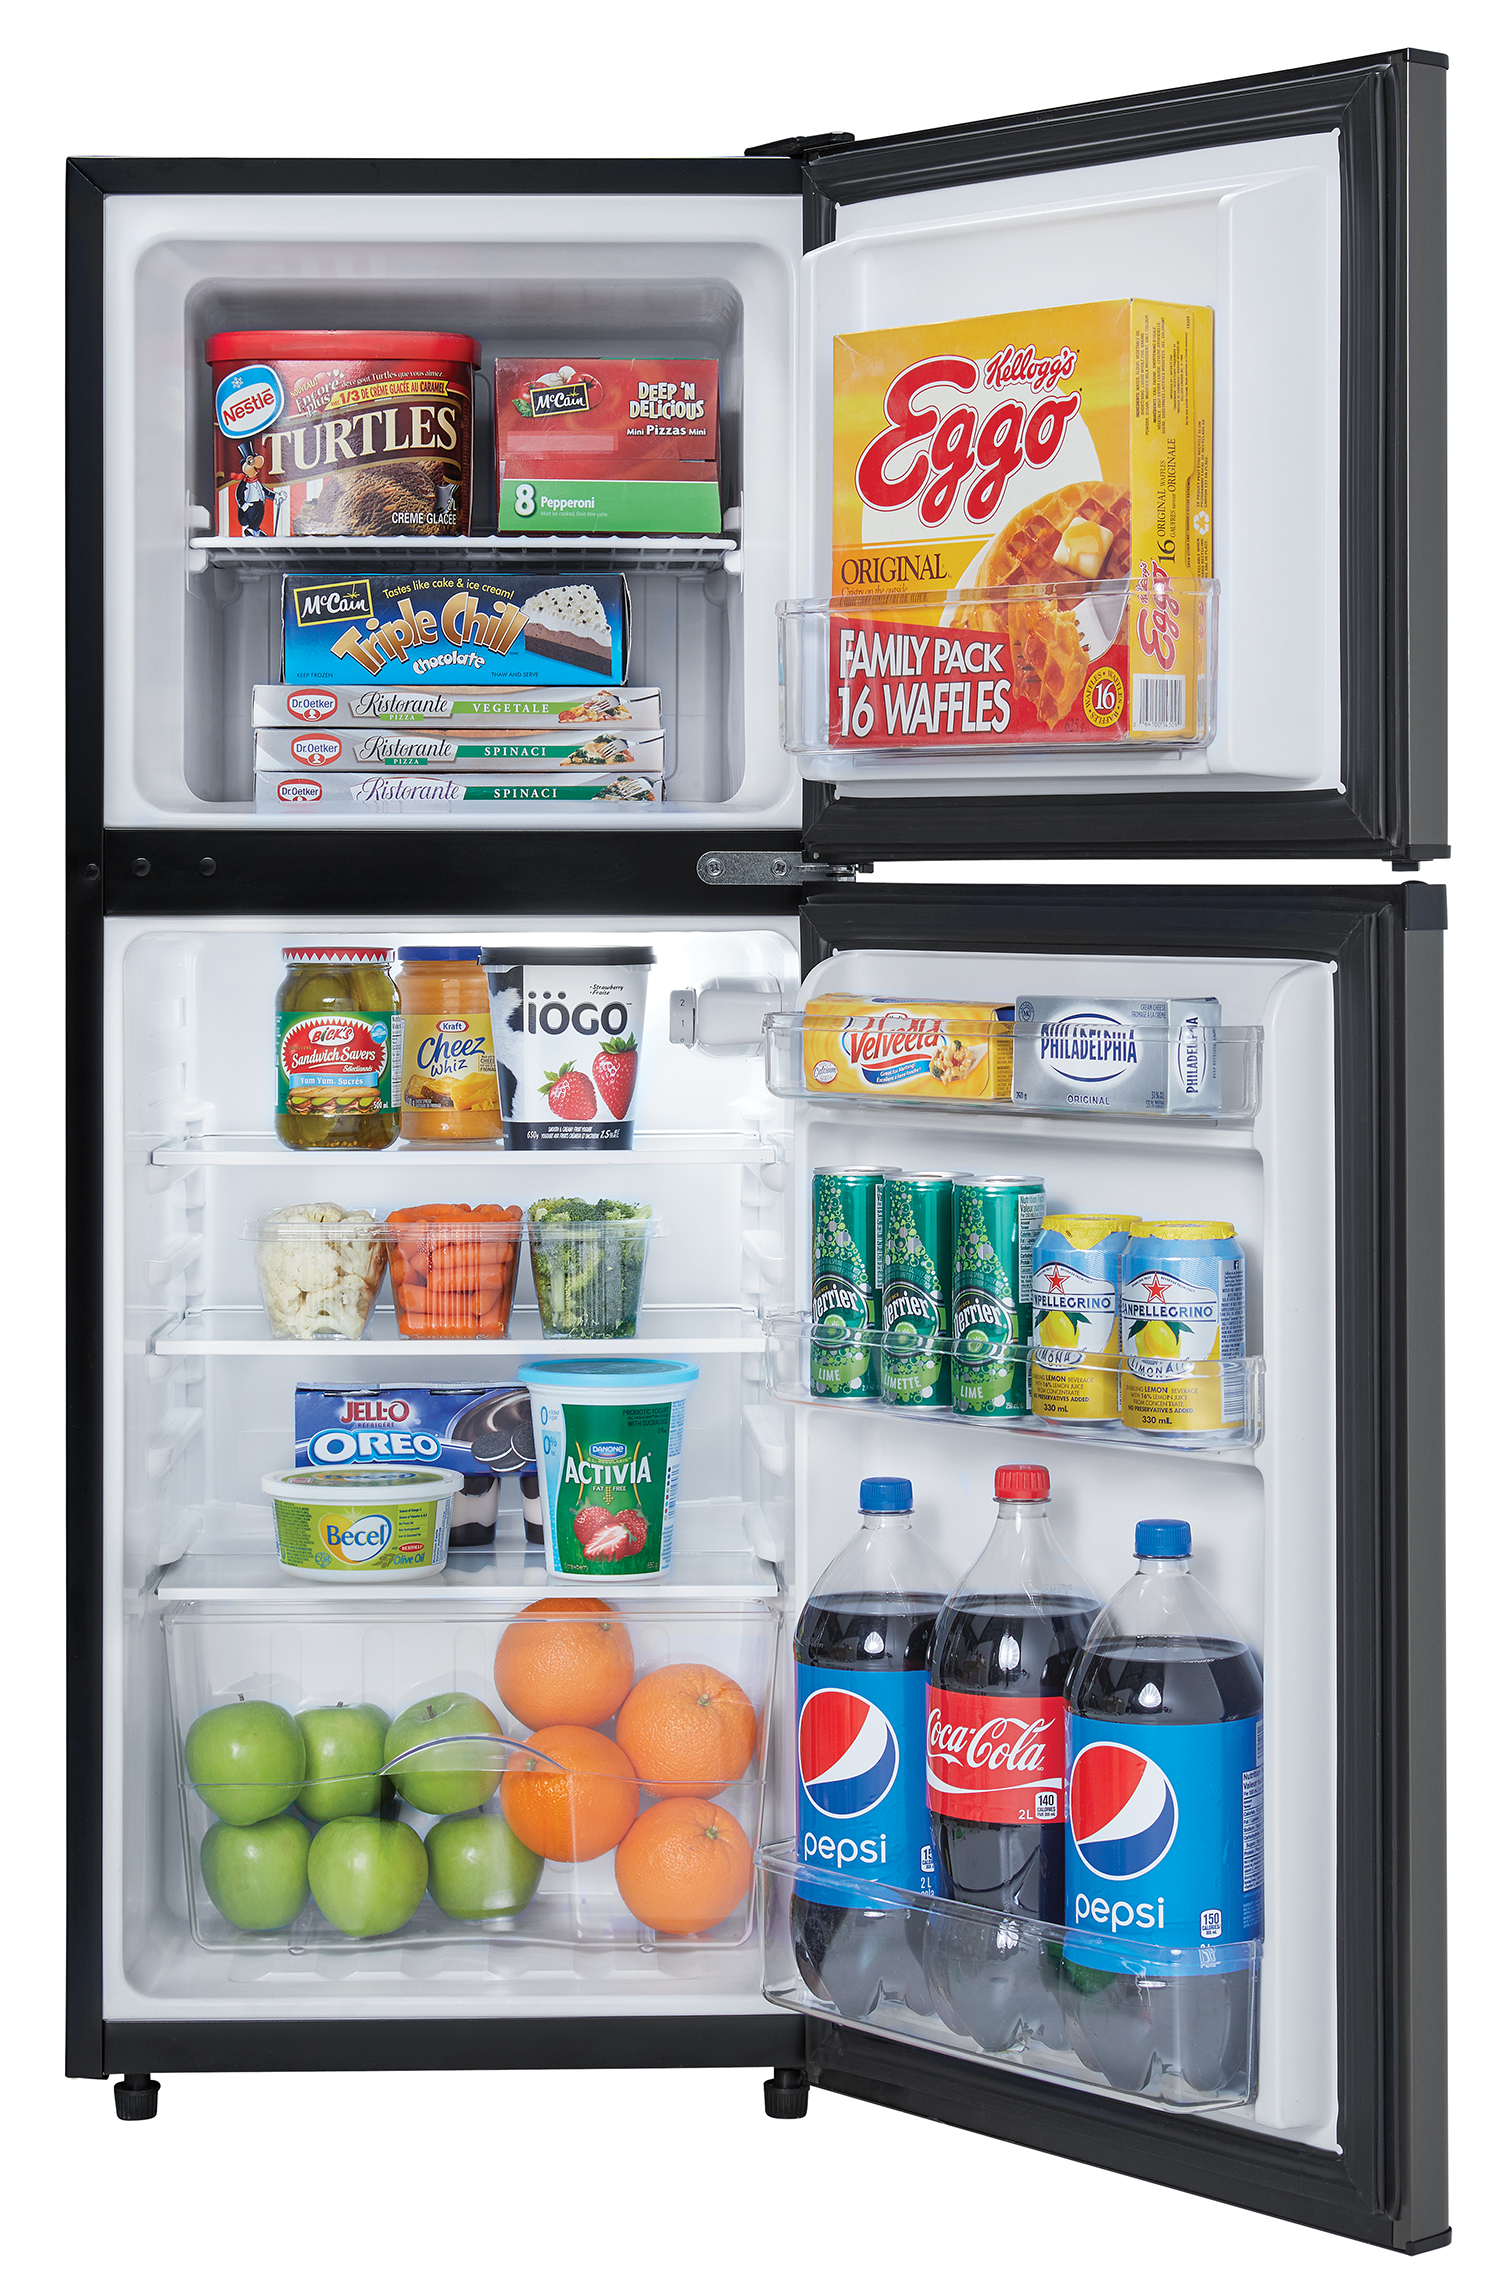 Danby 4.7 cu. ft. Compact Refrigerator